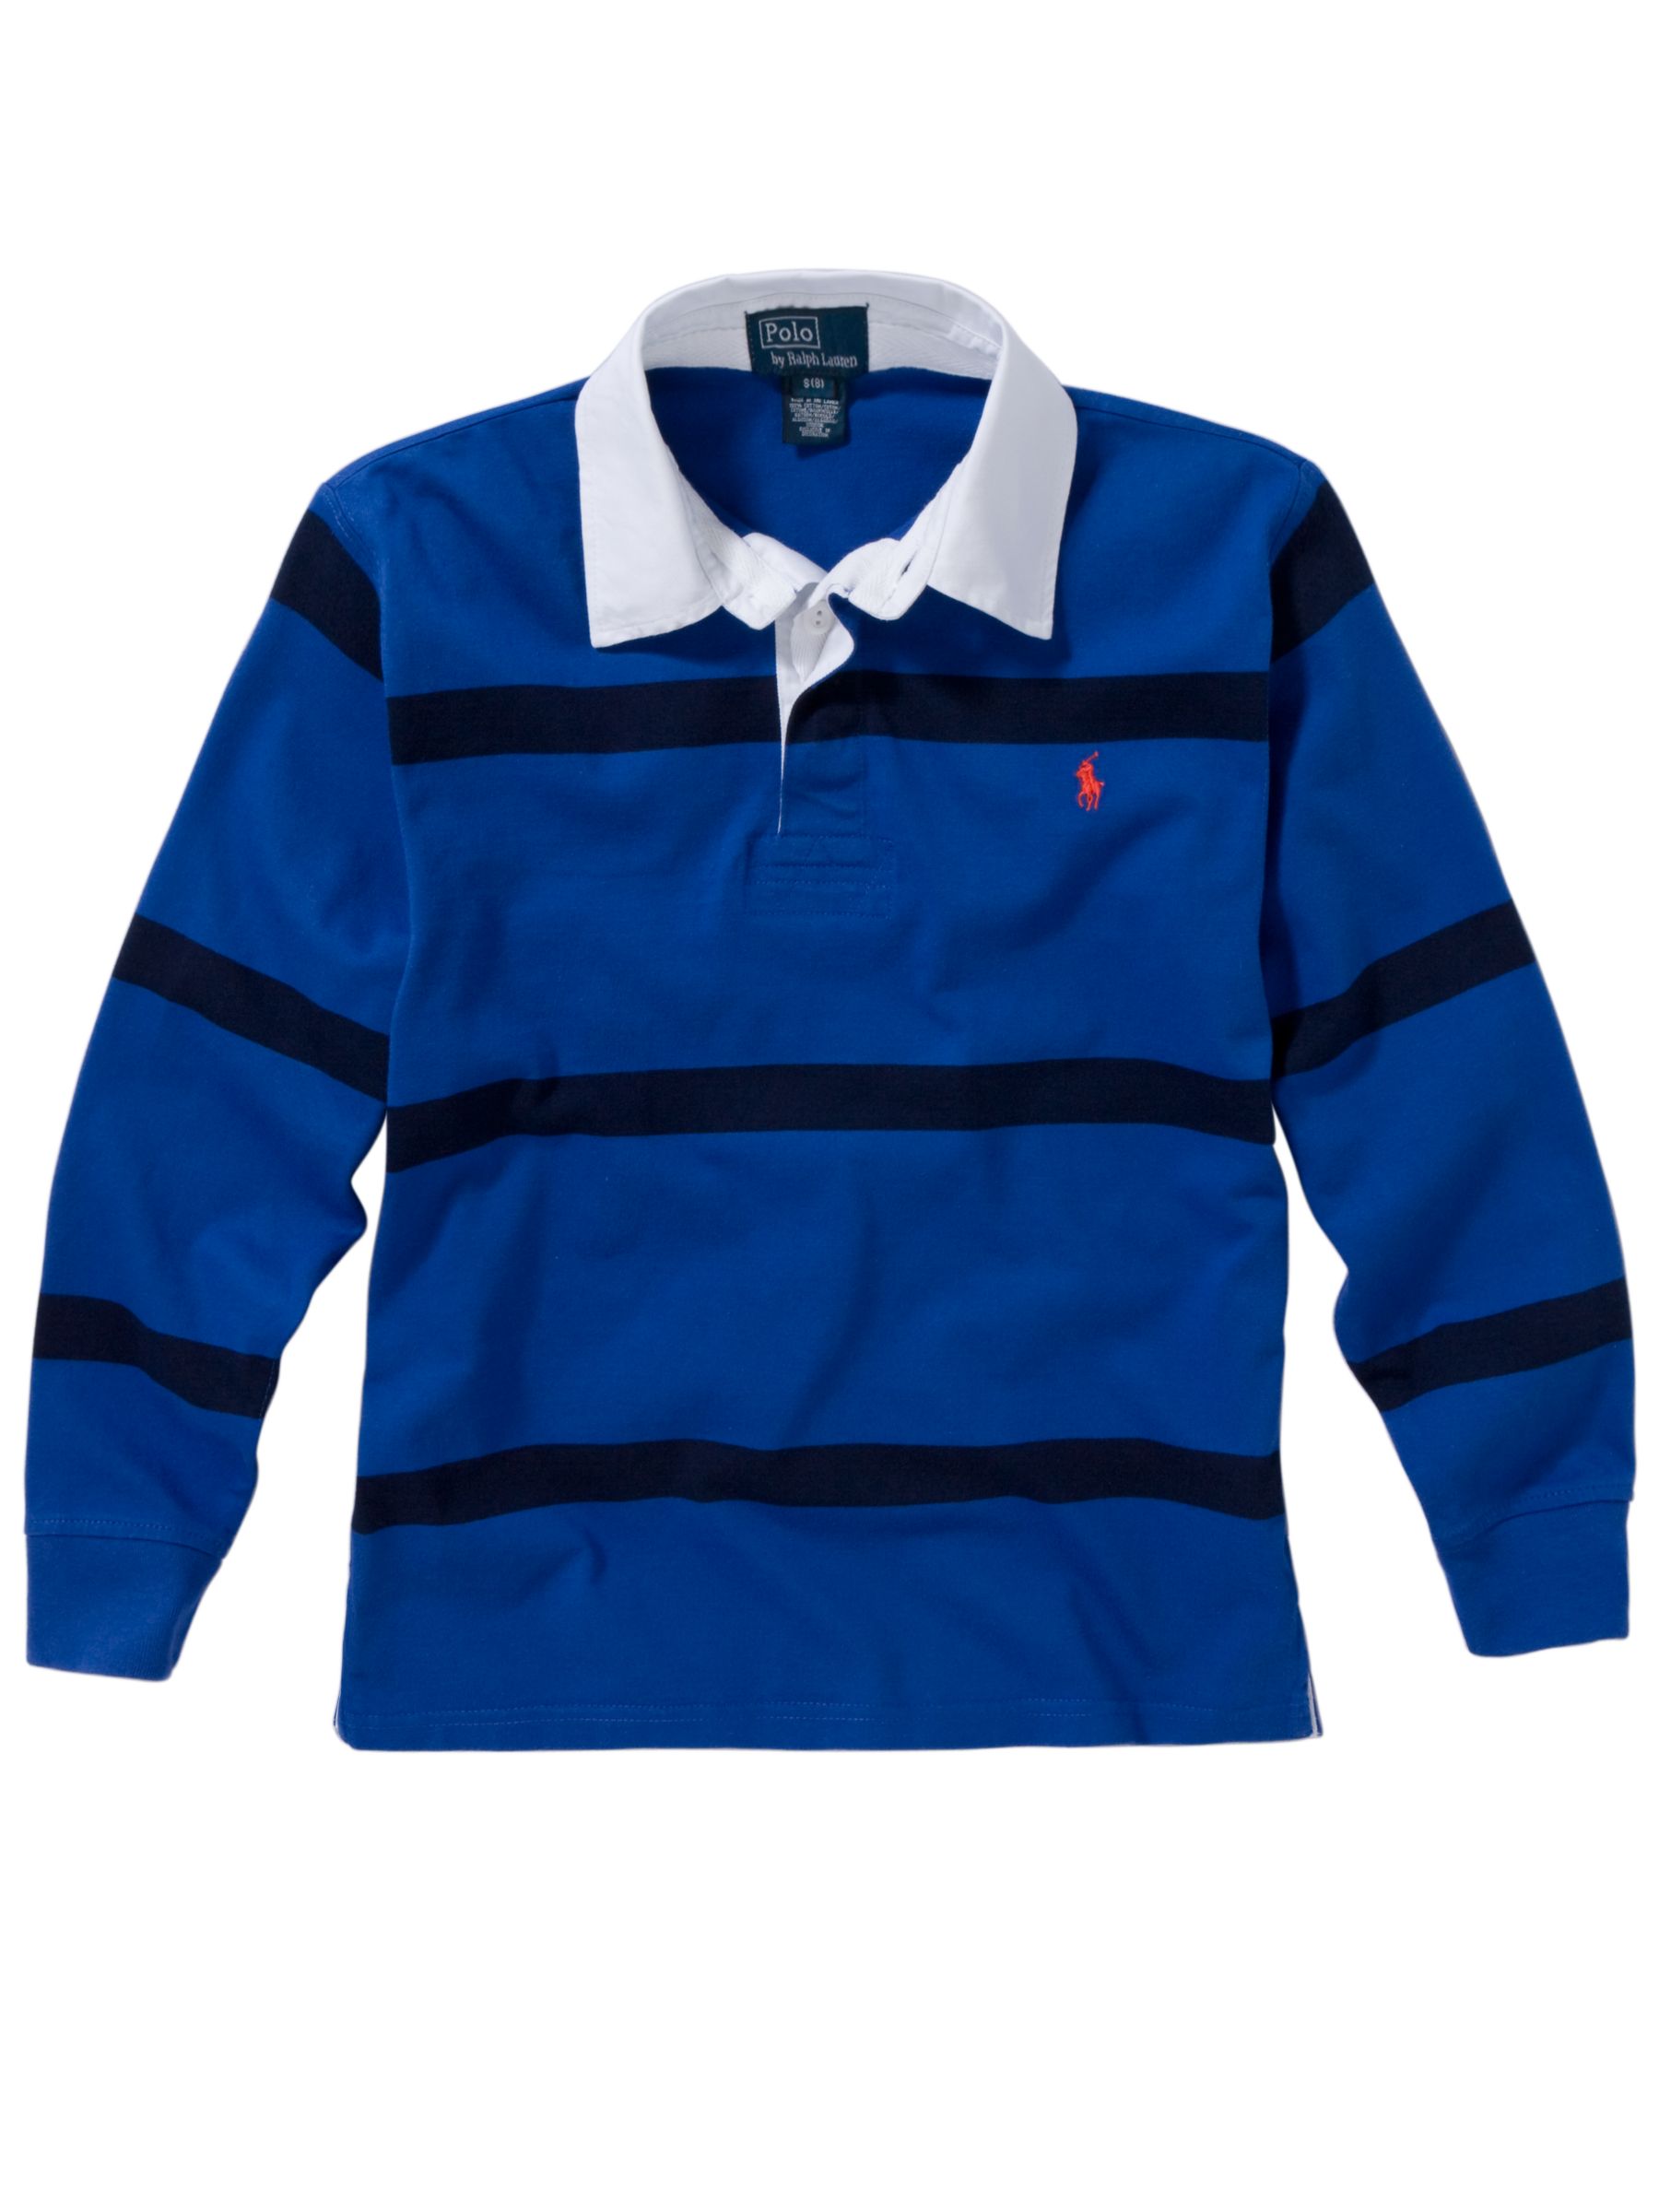 Polo Ralph Lauren Rugby Shirt, Blue, 3 years